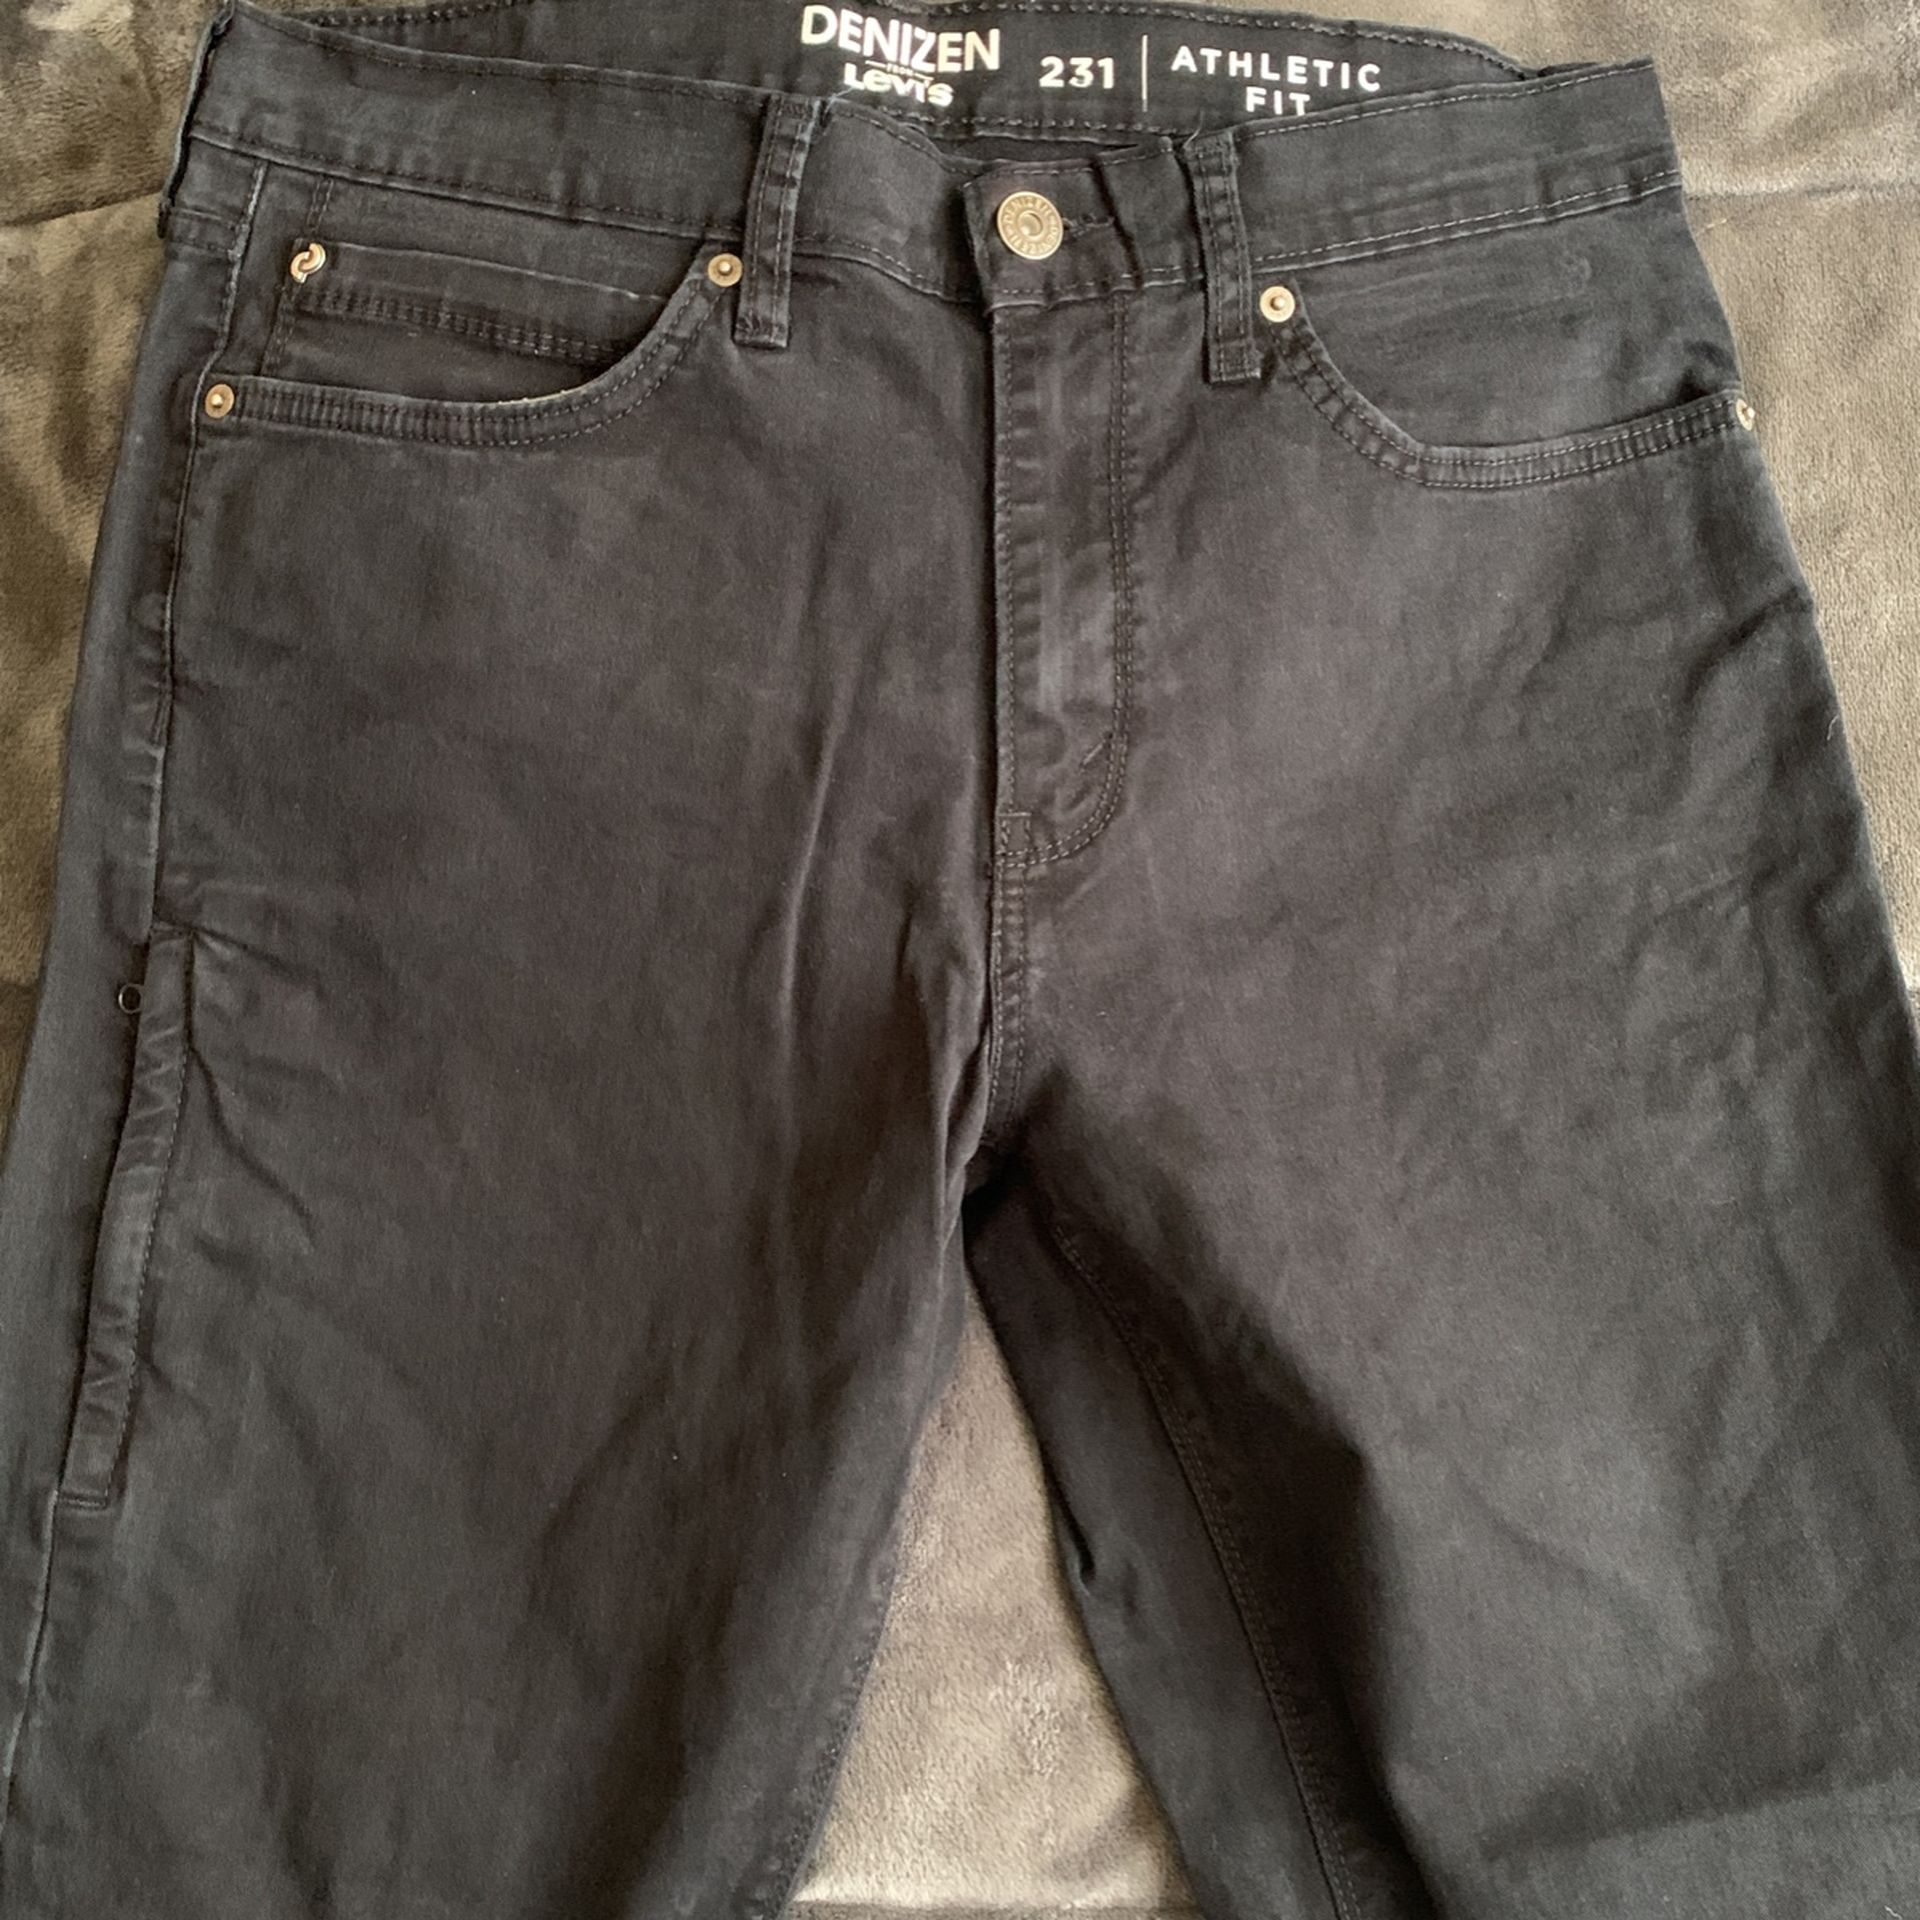 34x34 Black Athletic Fit Jeans